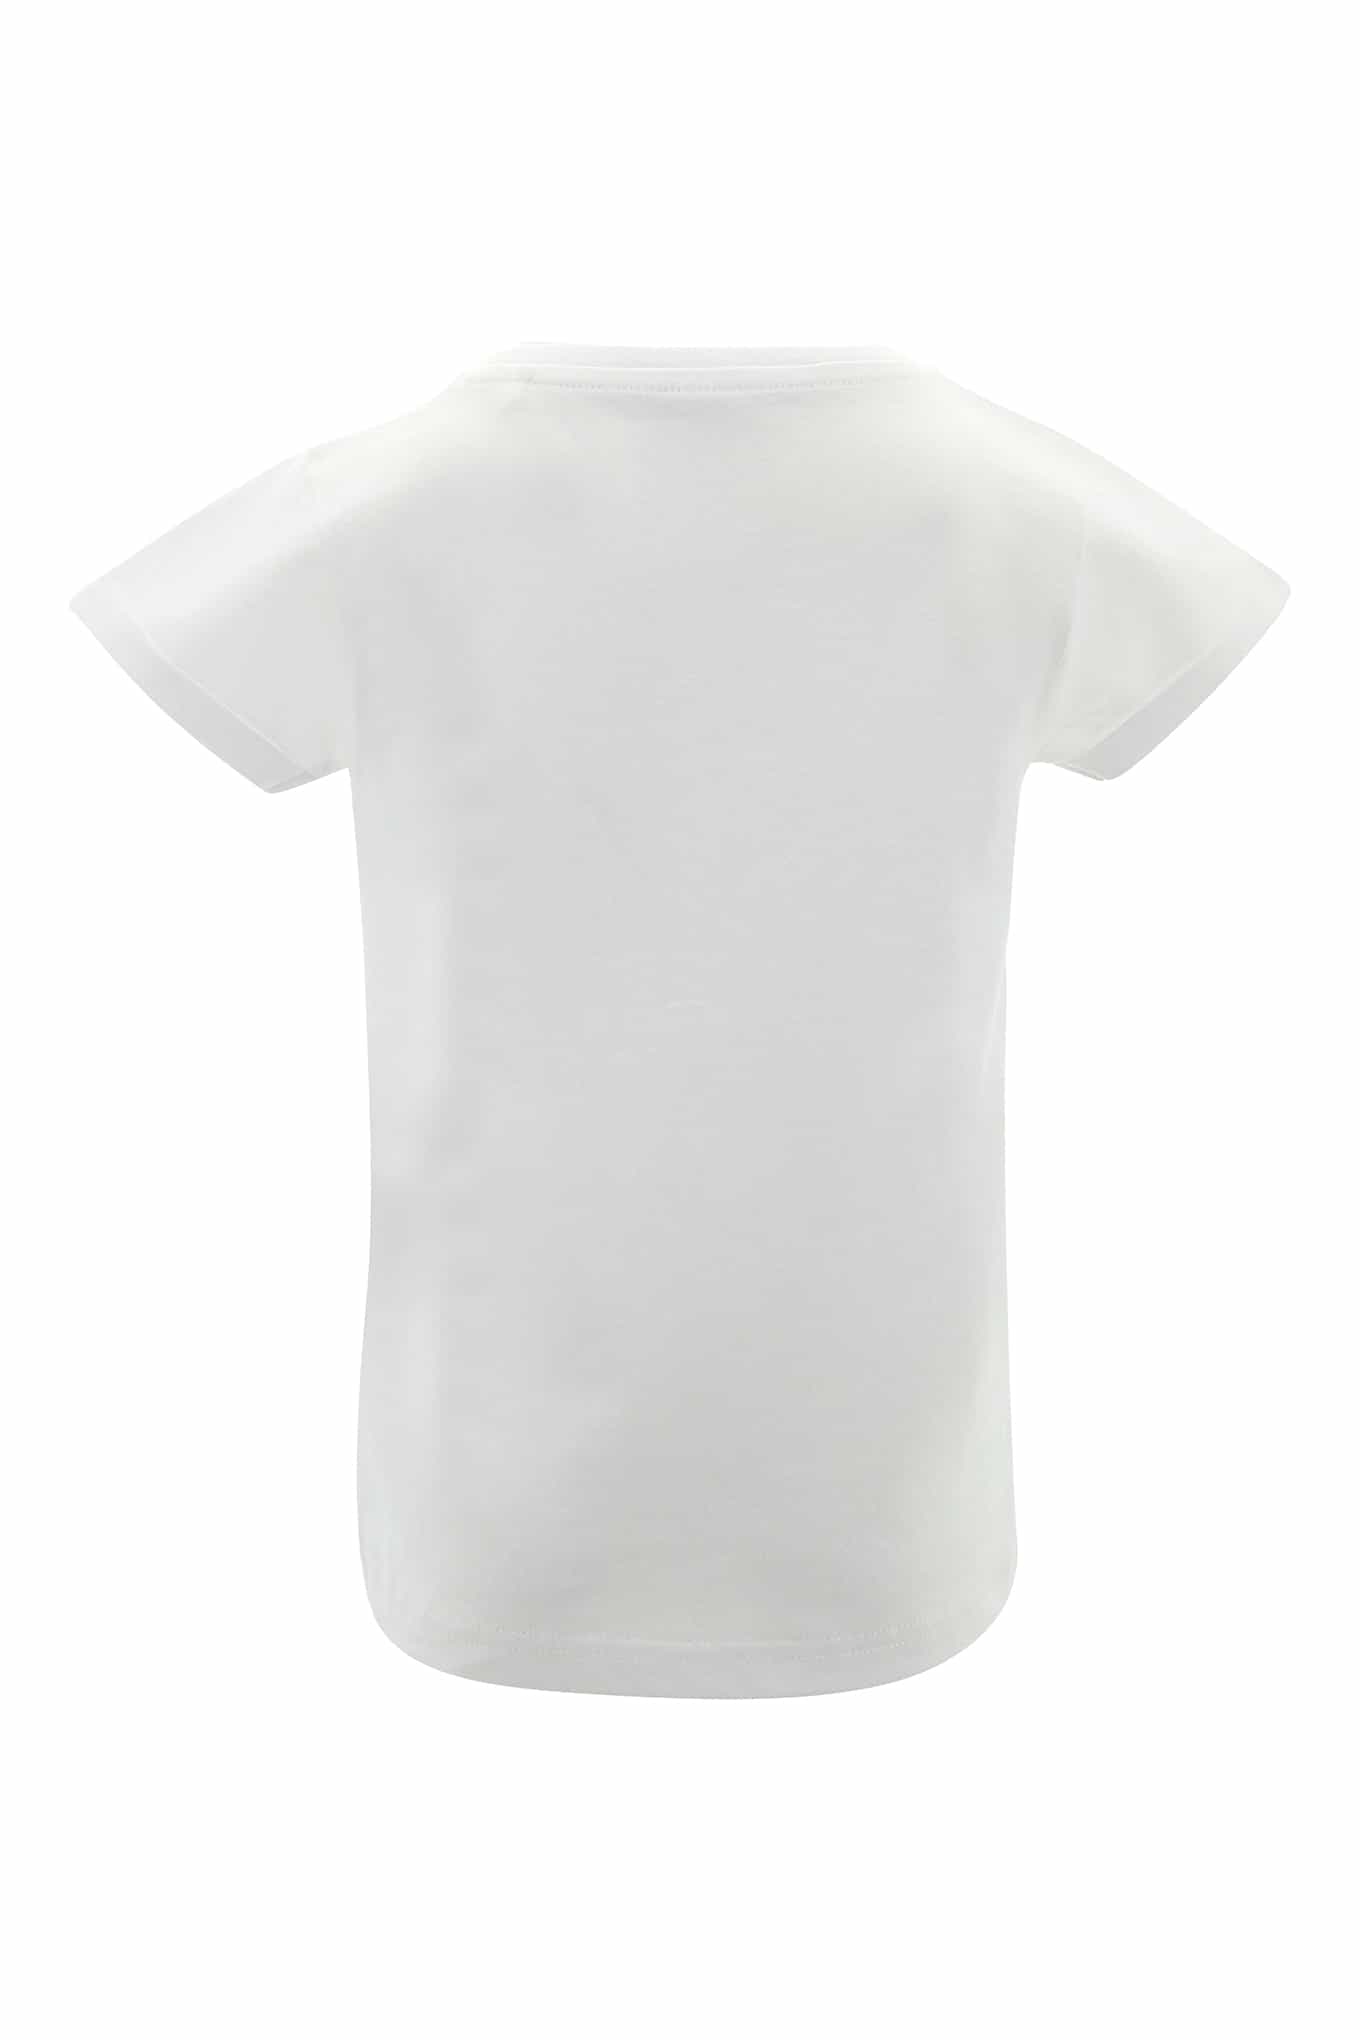 T-Shirt Branco Sport Rapariga